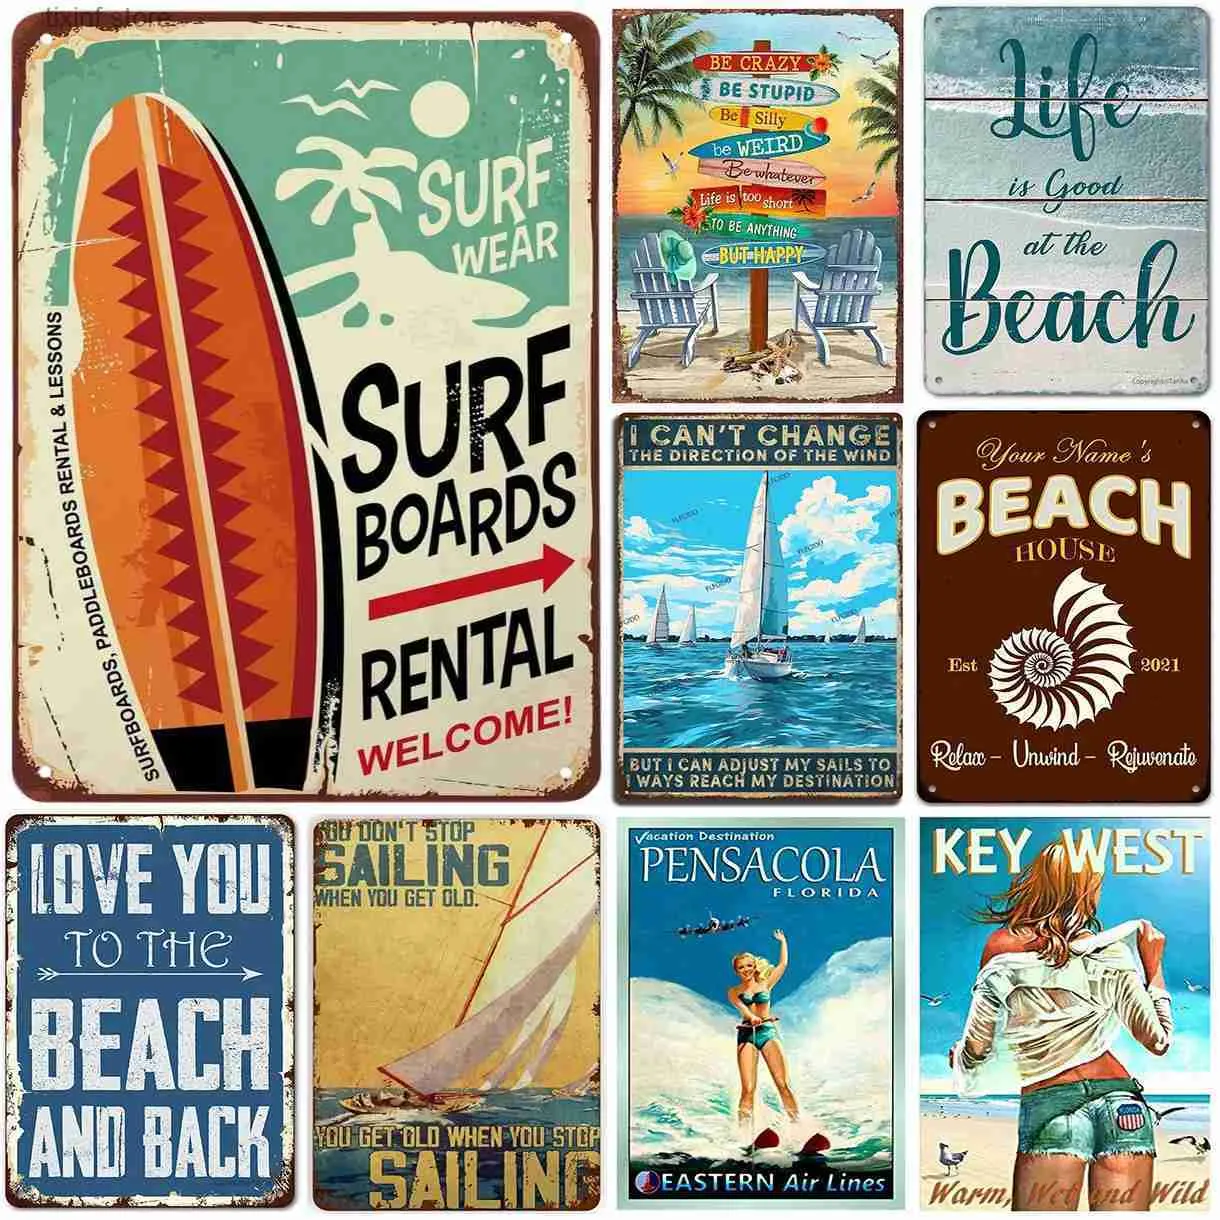 Metallmalerei Retro Life is Good At The Beach Surfen Segeln Metallblechschilder Vintage Poster für Bars Man Cave Cafe Pub Clubs Home Wall Decor T240309